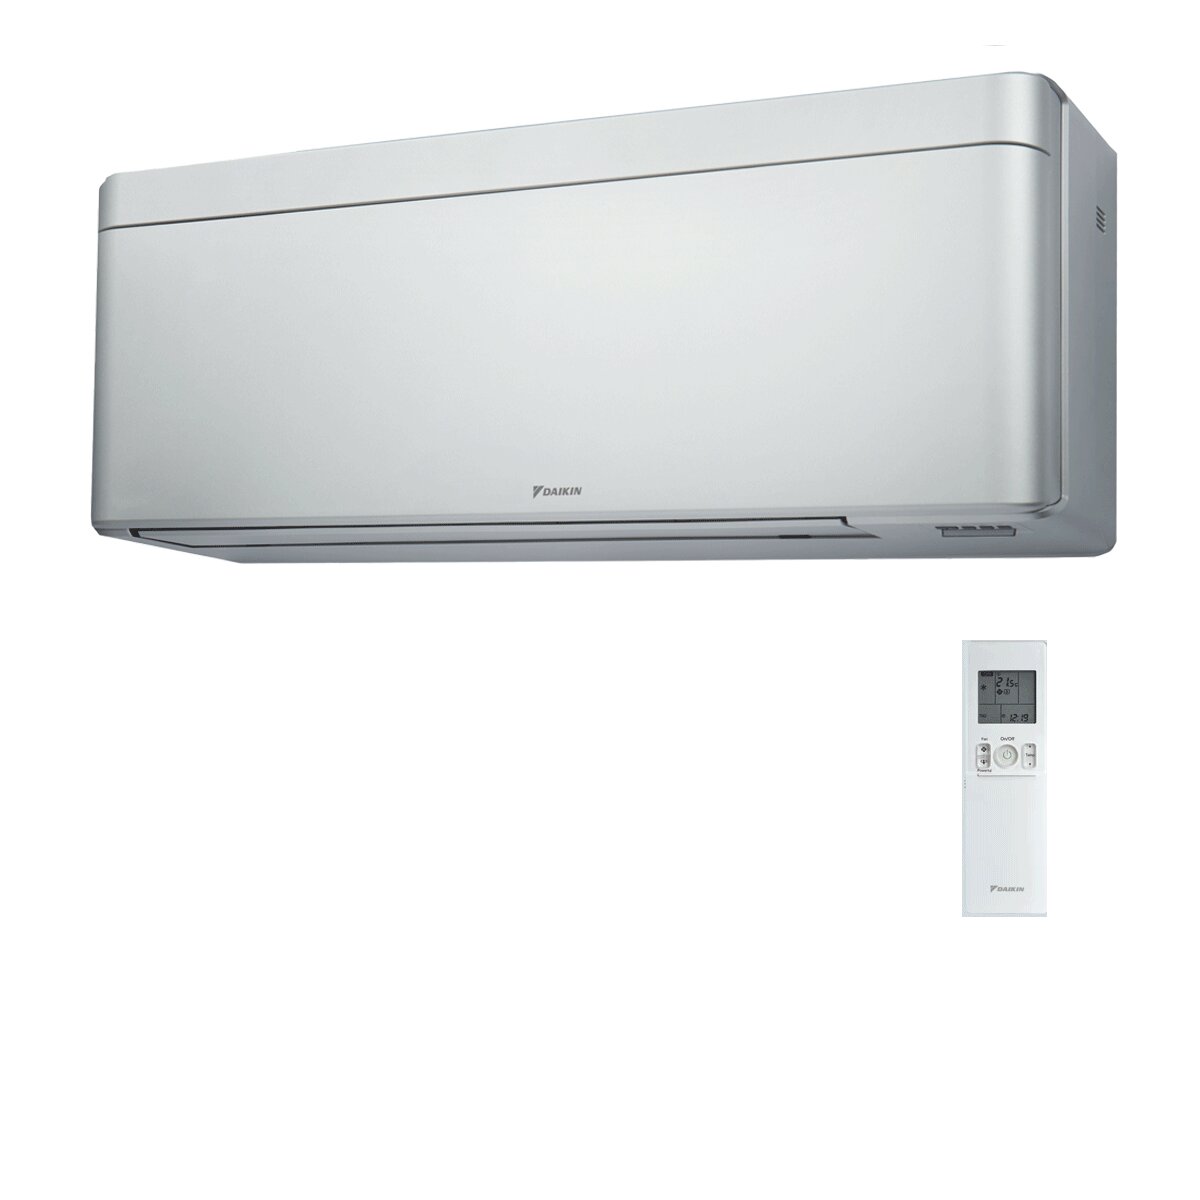 Daikin Stylish Silver penta split air conditioner 7000+7000+9000+9000+12000 BTU inverter A++ wifi external unit 7.8 kW